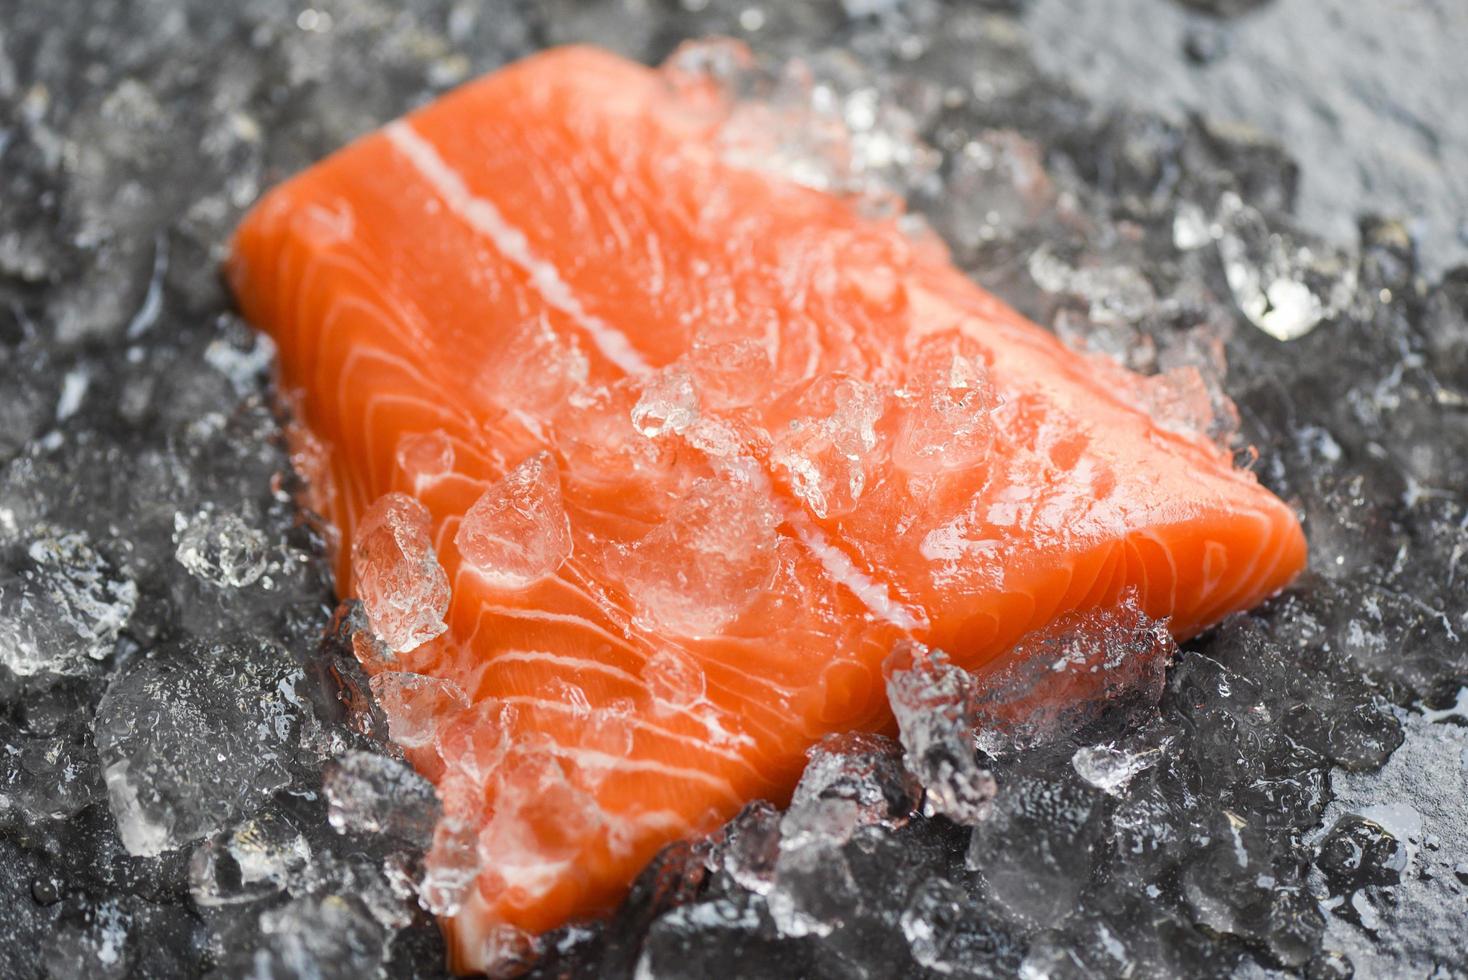 Fresh raw salmon fish steak on ice and dark stone background photo